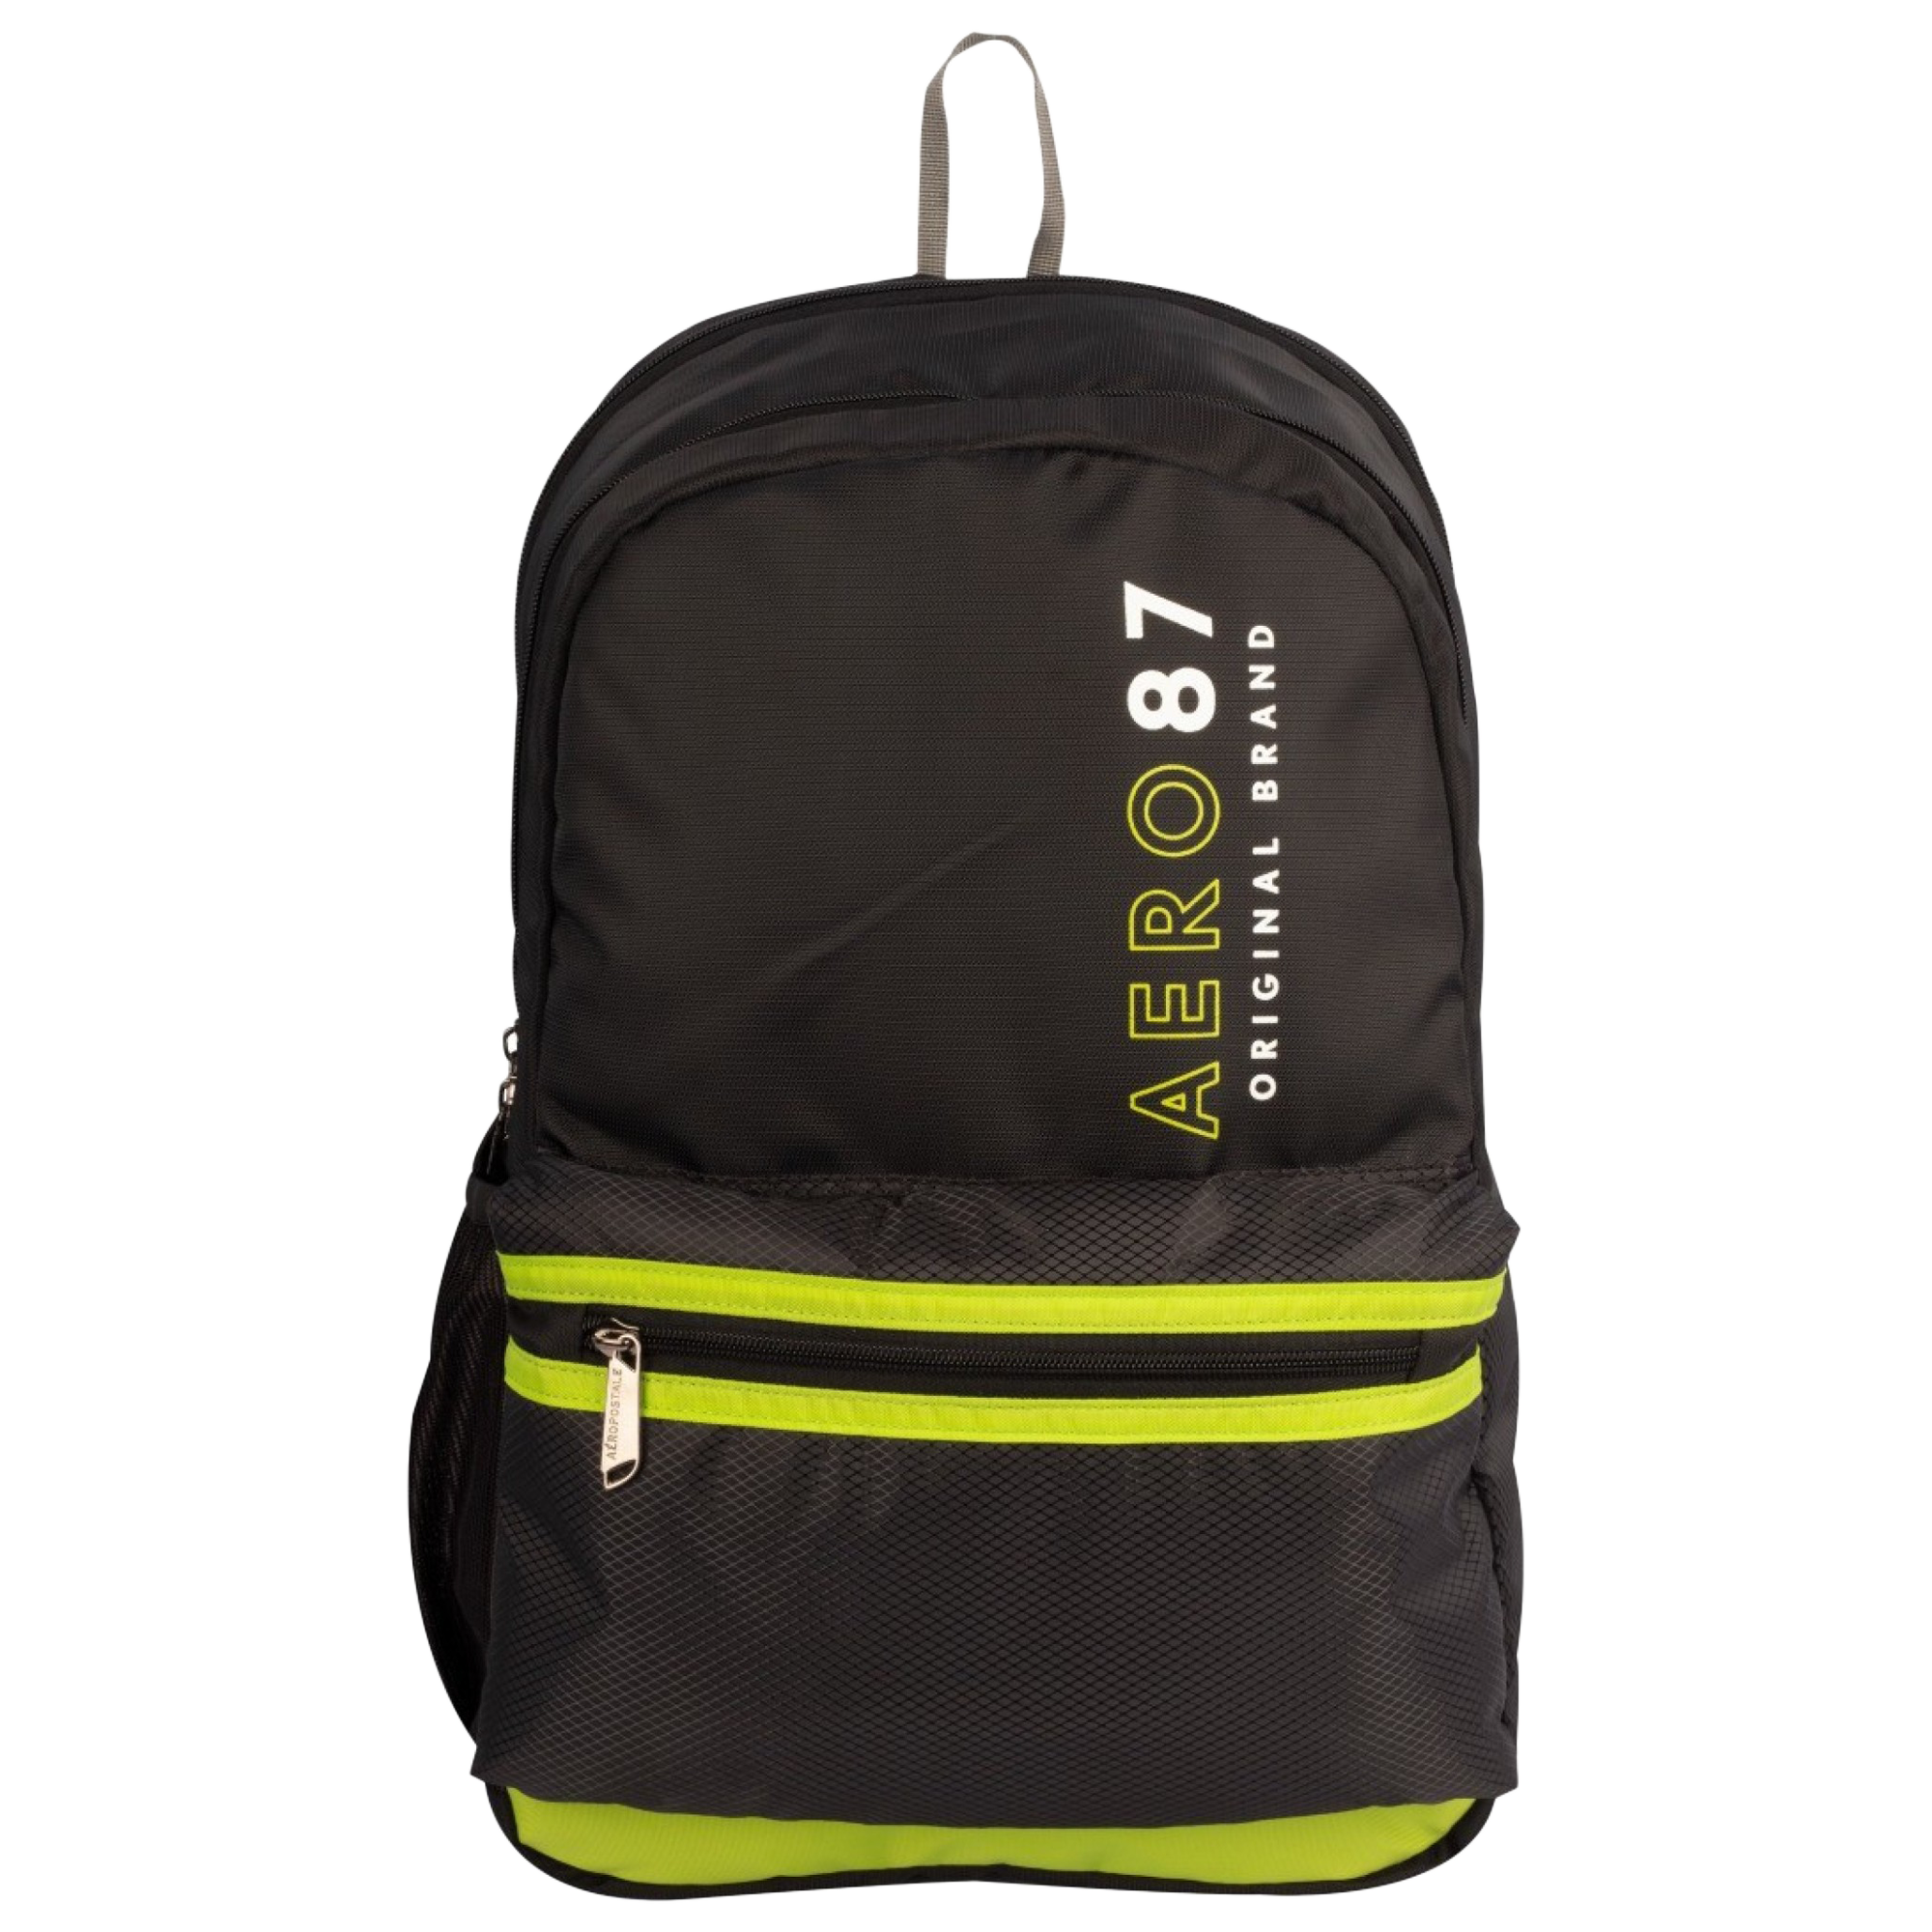 Aeropostale Take Off 20 Litres Nylon Backpack (Waterproof, AERO-BP-1001-BLK_P, Black/Green)